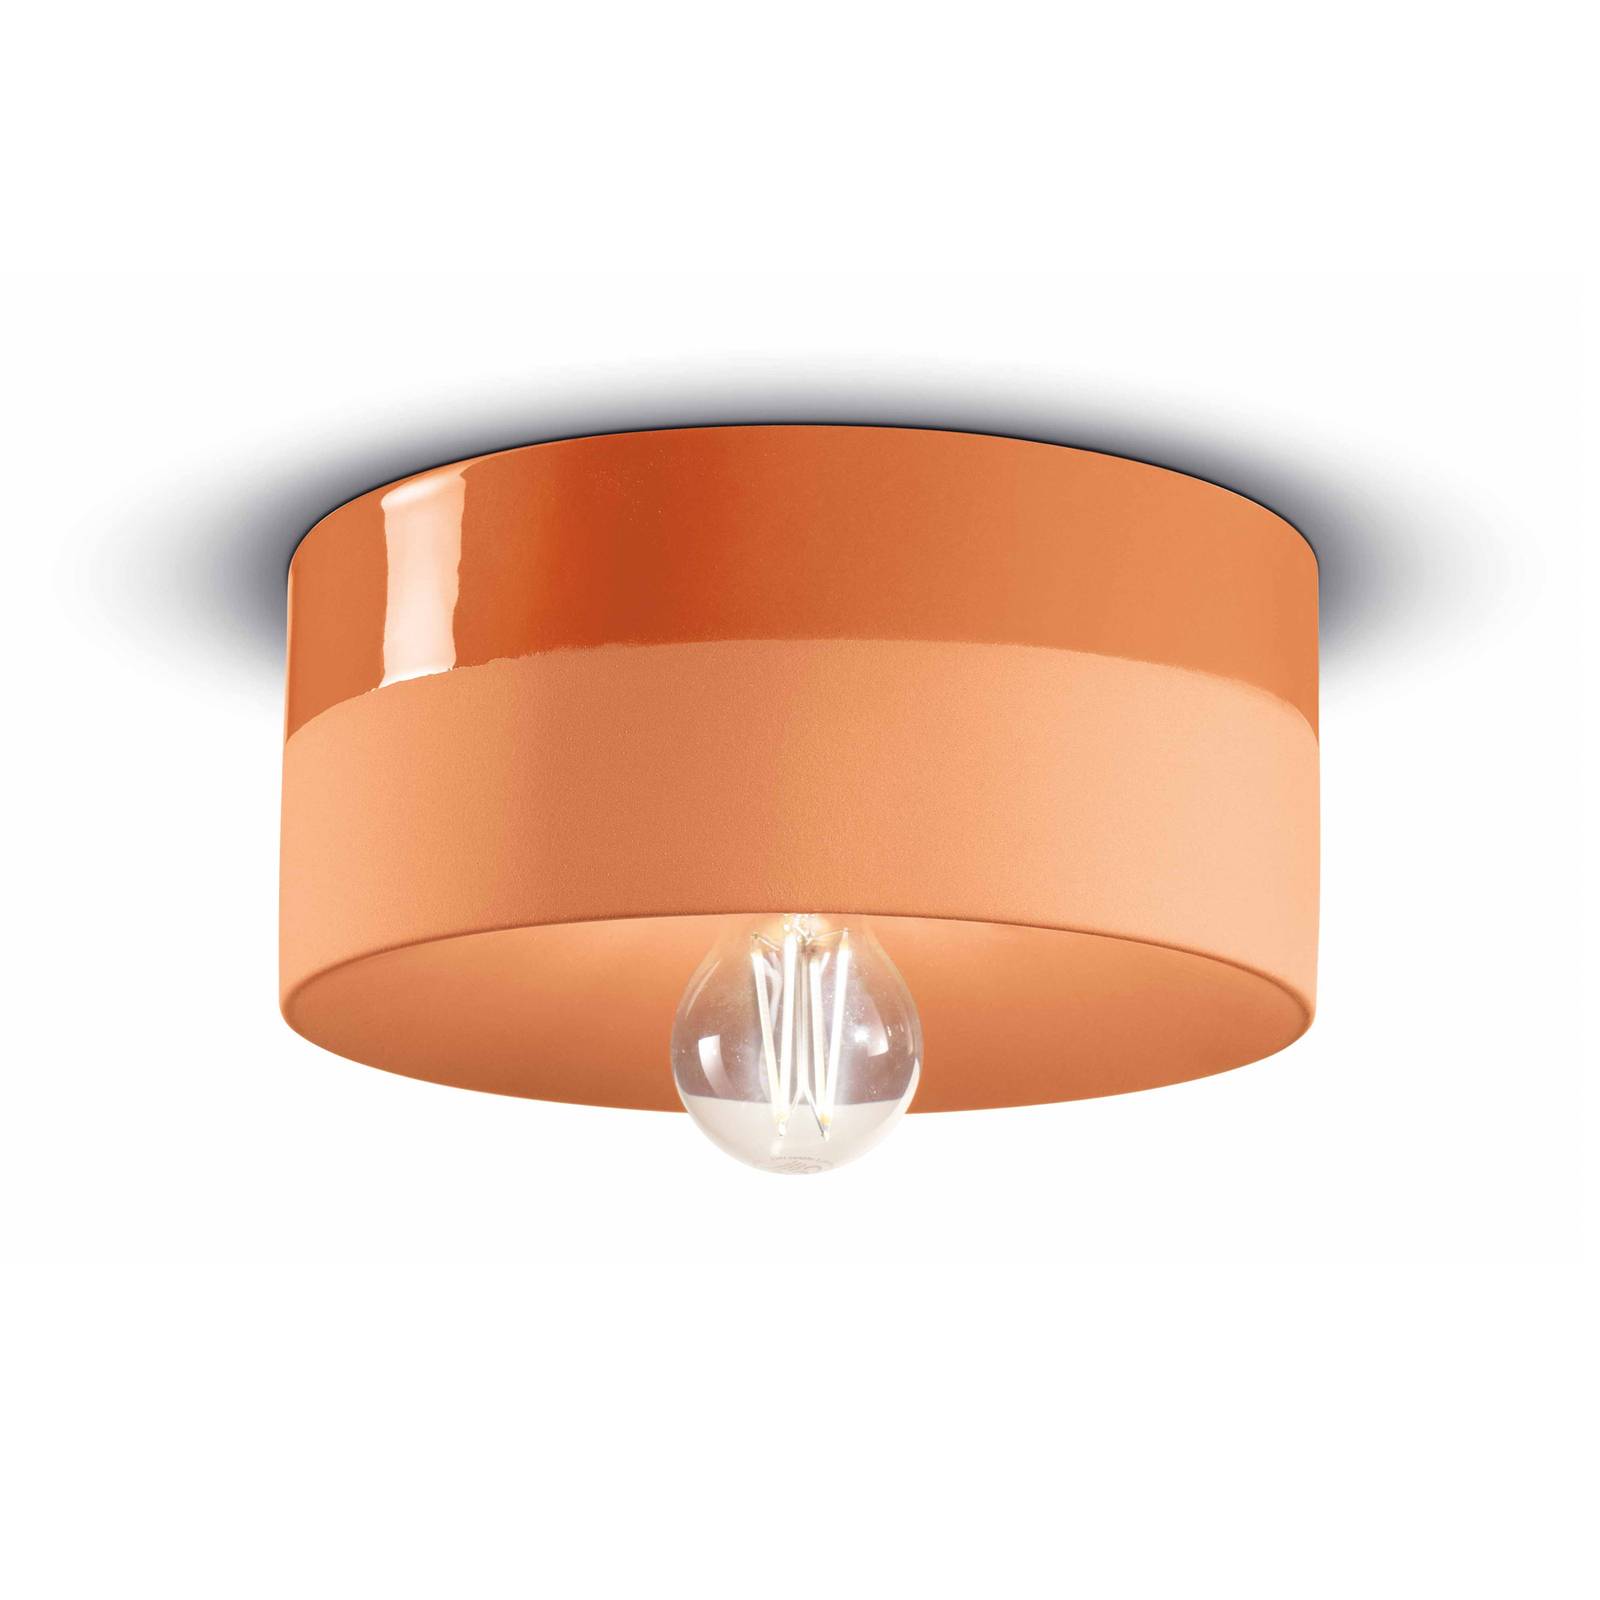 Ferroluce Deckenlampe PI Keramik glänzend/matt Ø 25cm orange